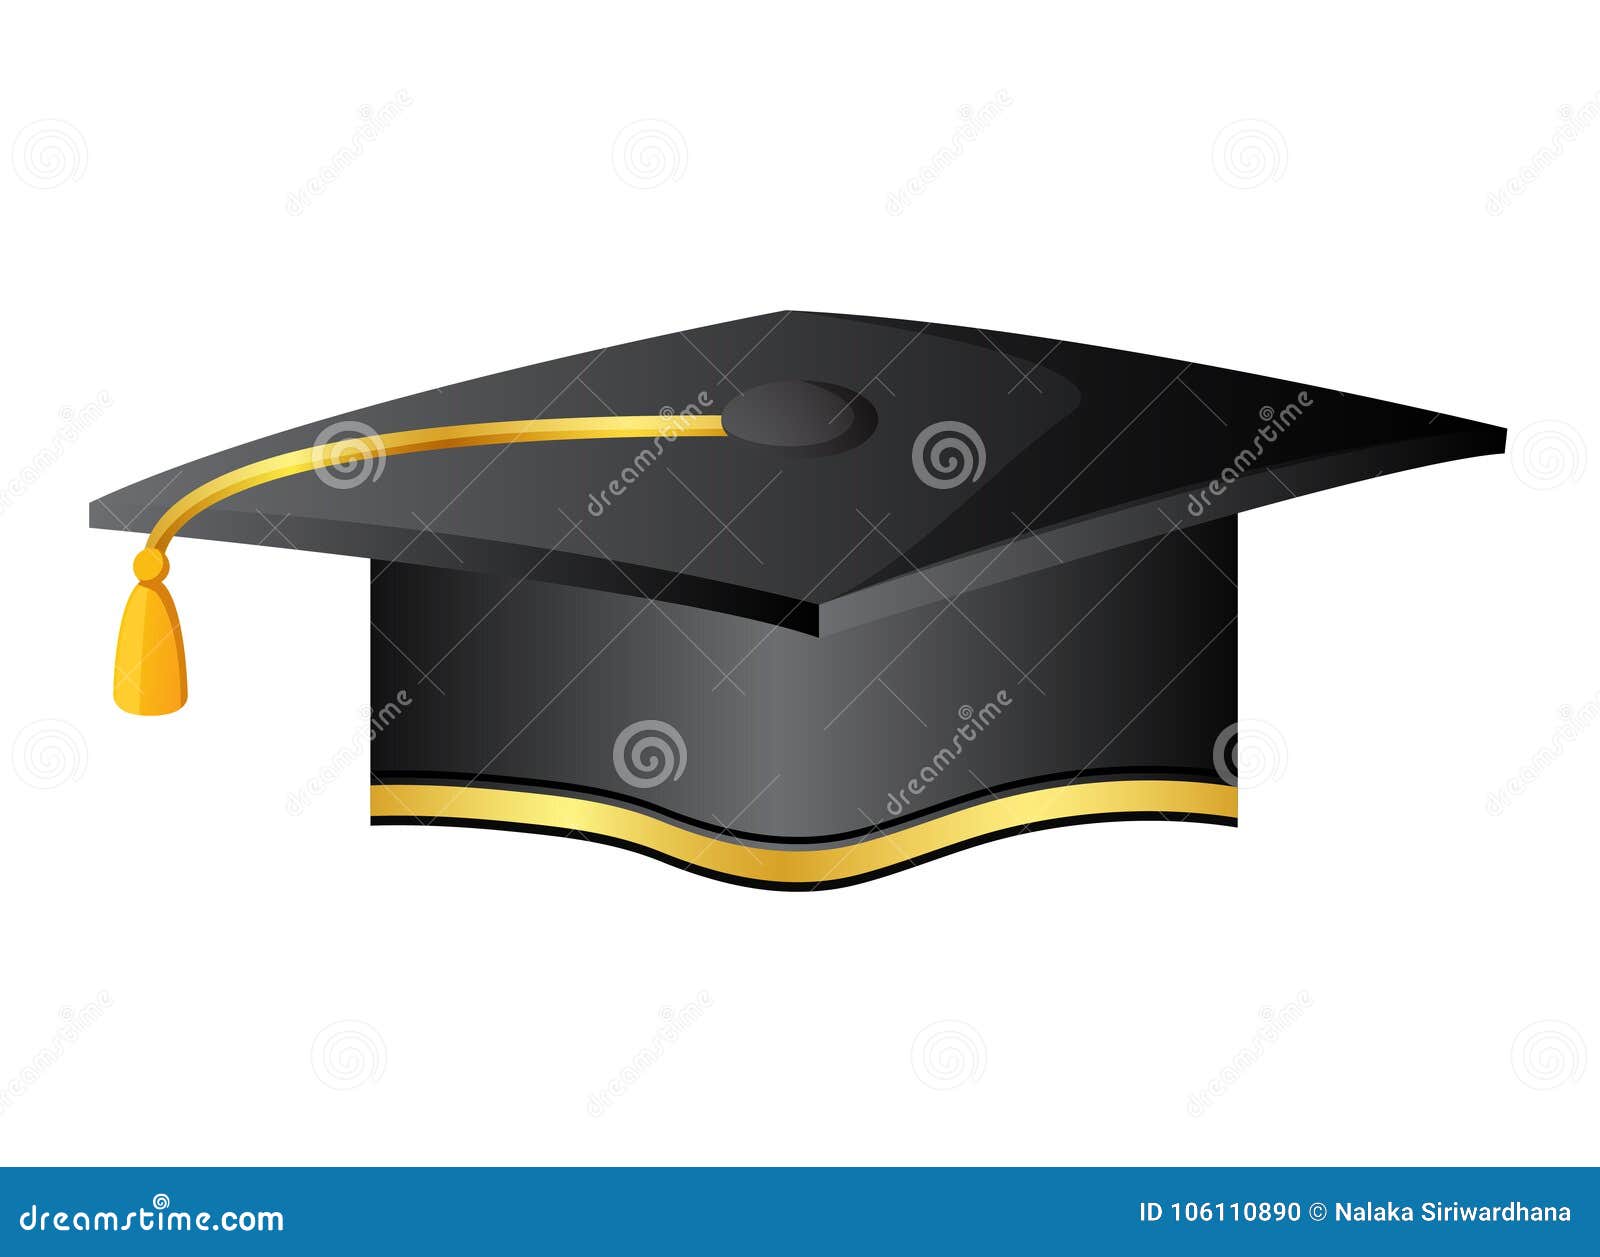 Graduation Mortar Board Hat or Cap Stock Vector - Illustration of ...